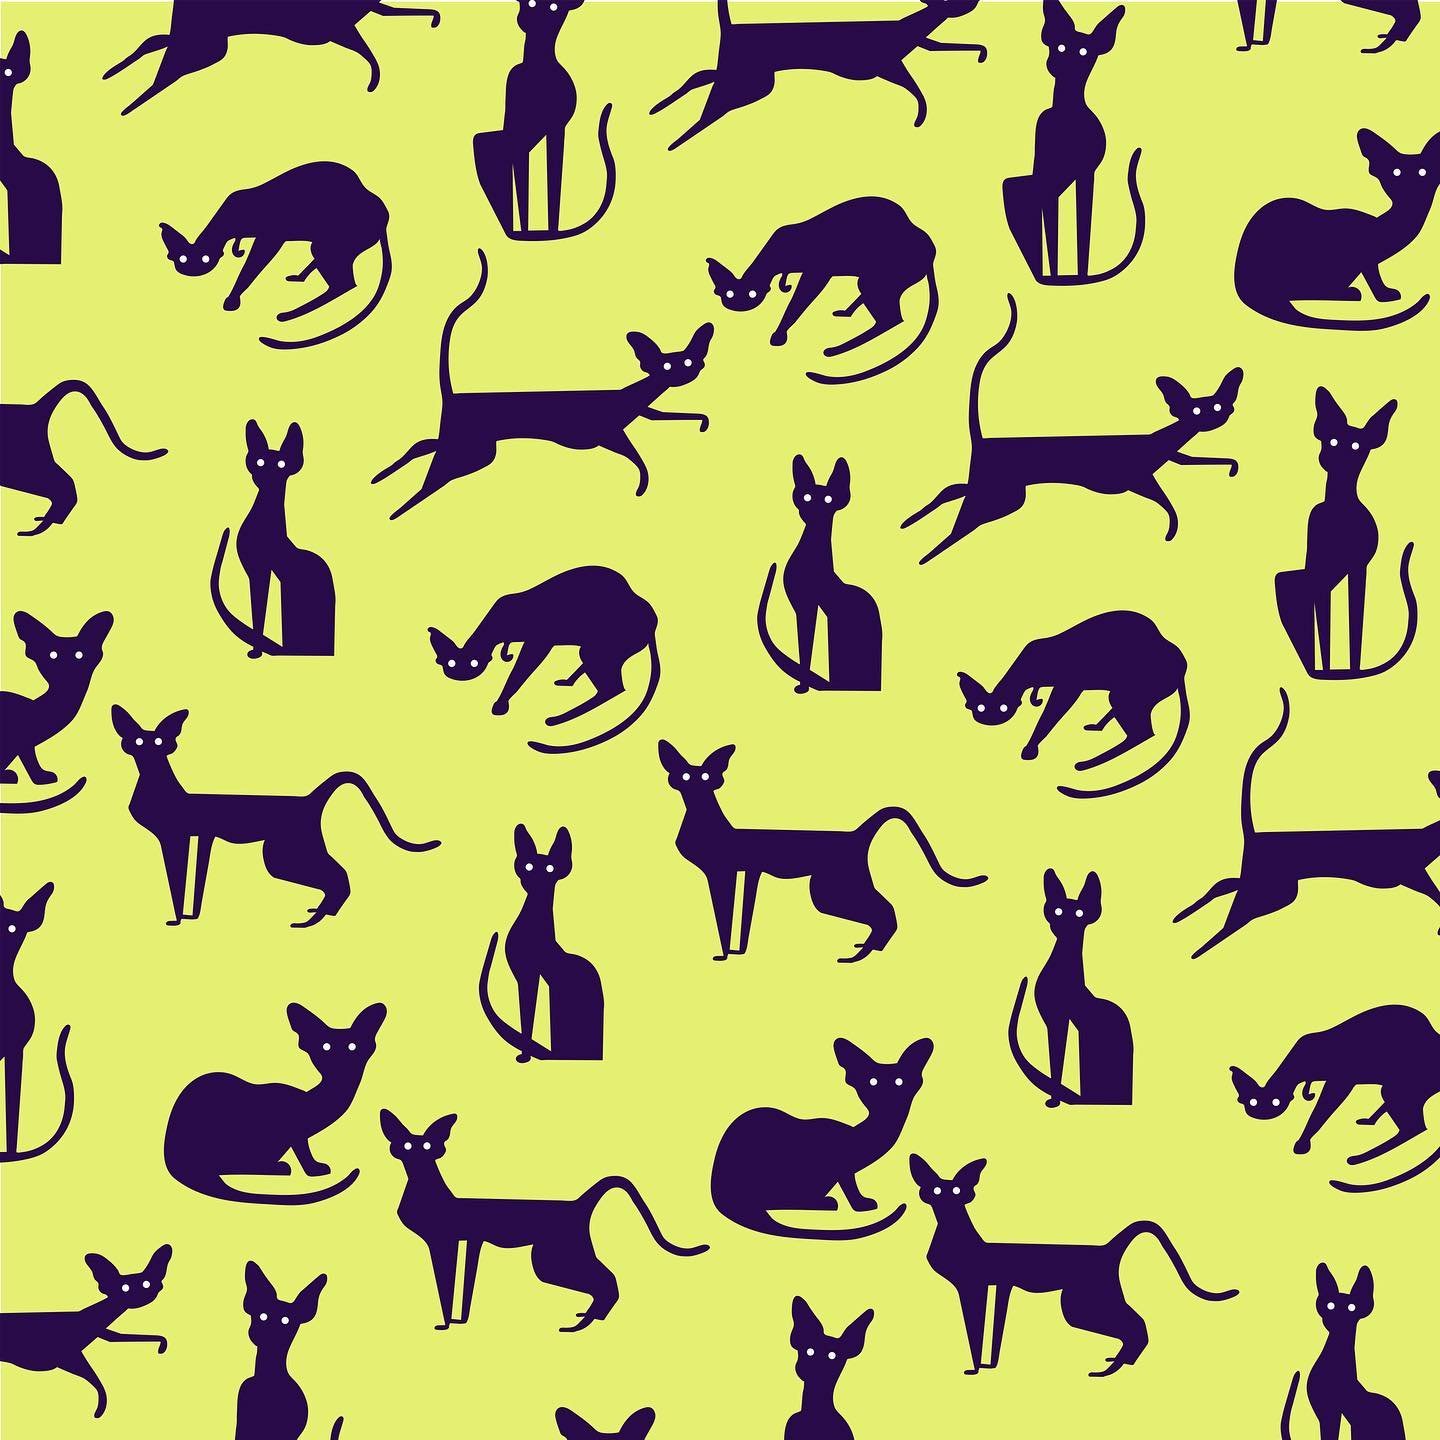 Cats. 
That is all.

#cats #illustration #design #repeatpattern #allthecats #digitalillustration